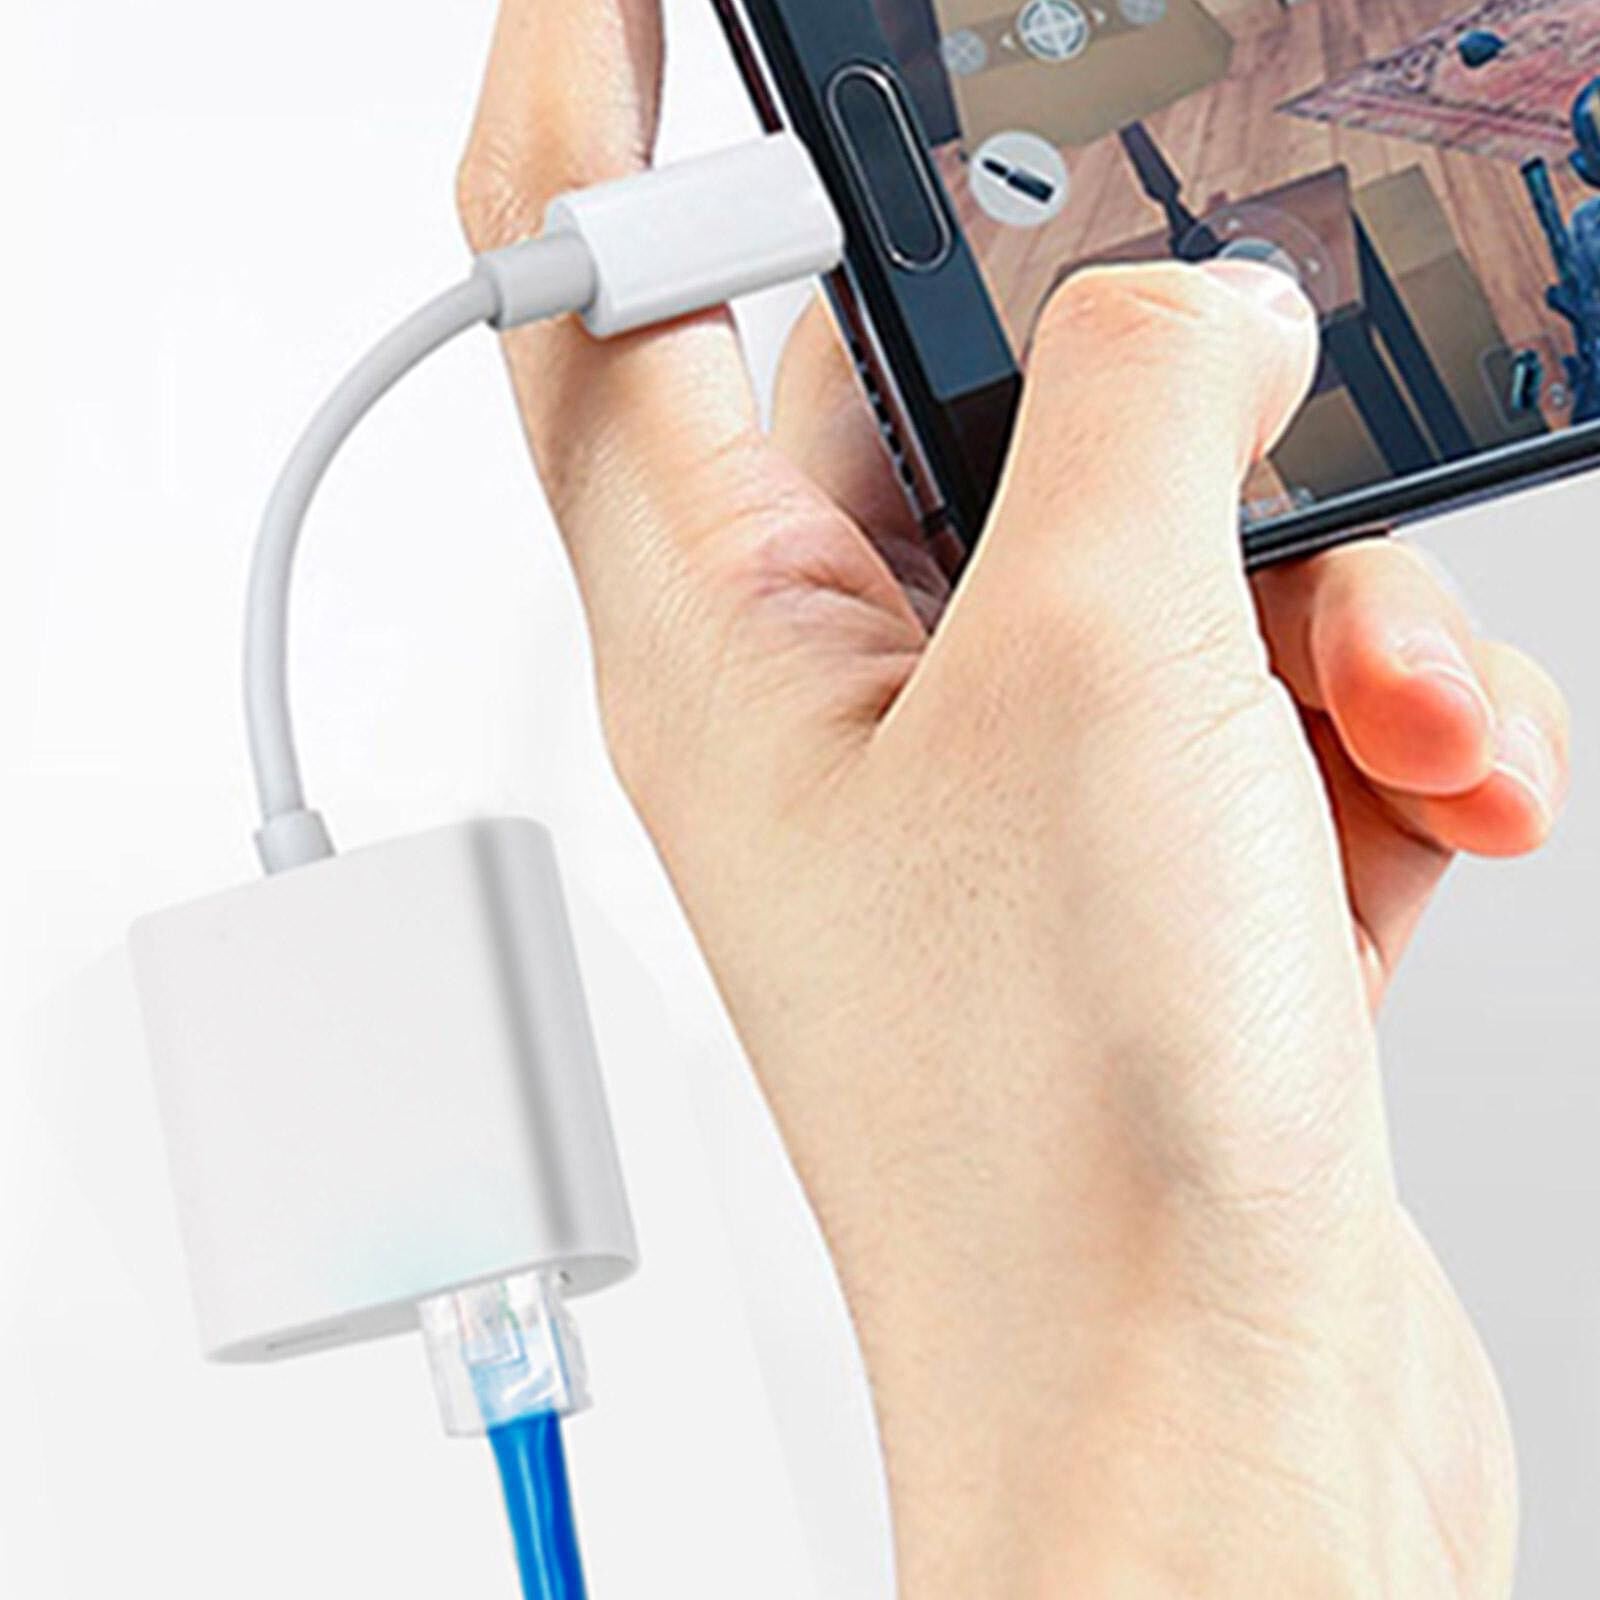 Avizar Adaptateur pour iPhone / iPad Lightning vers USB et Jack 3.5mm et  Lightning Blanc - Câble & Adaptateur - LDLC